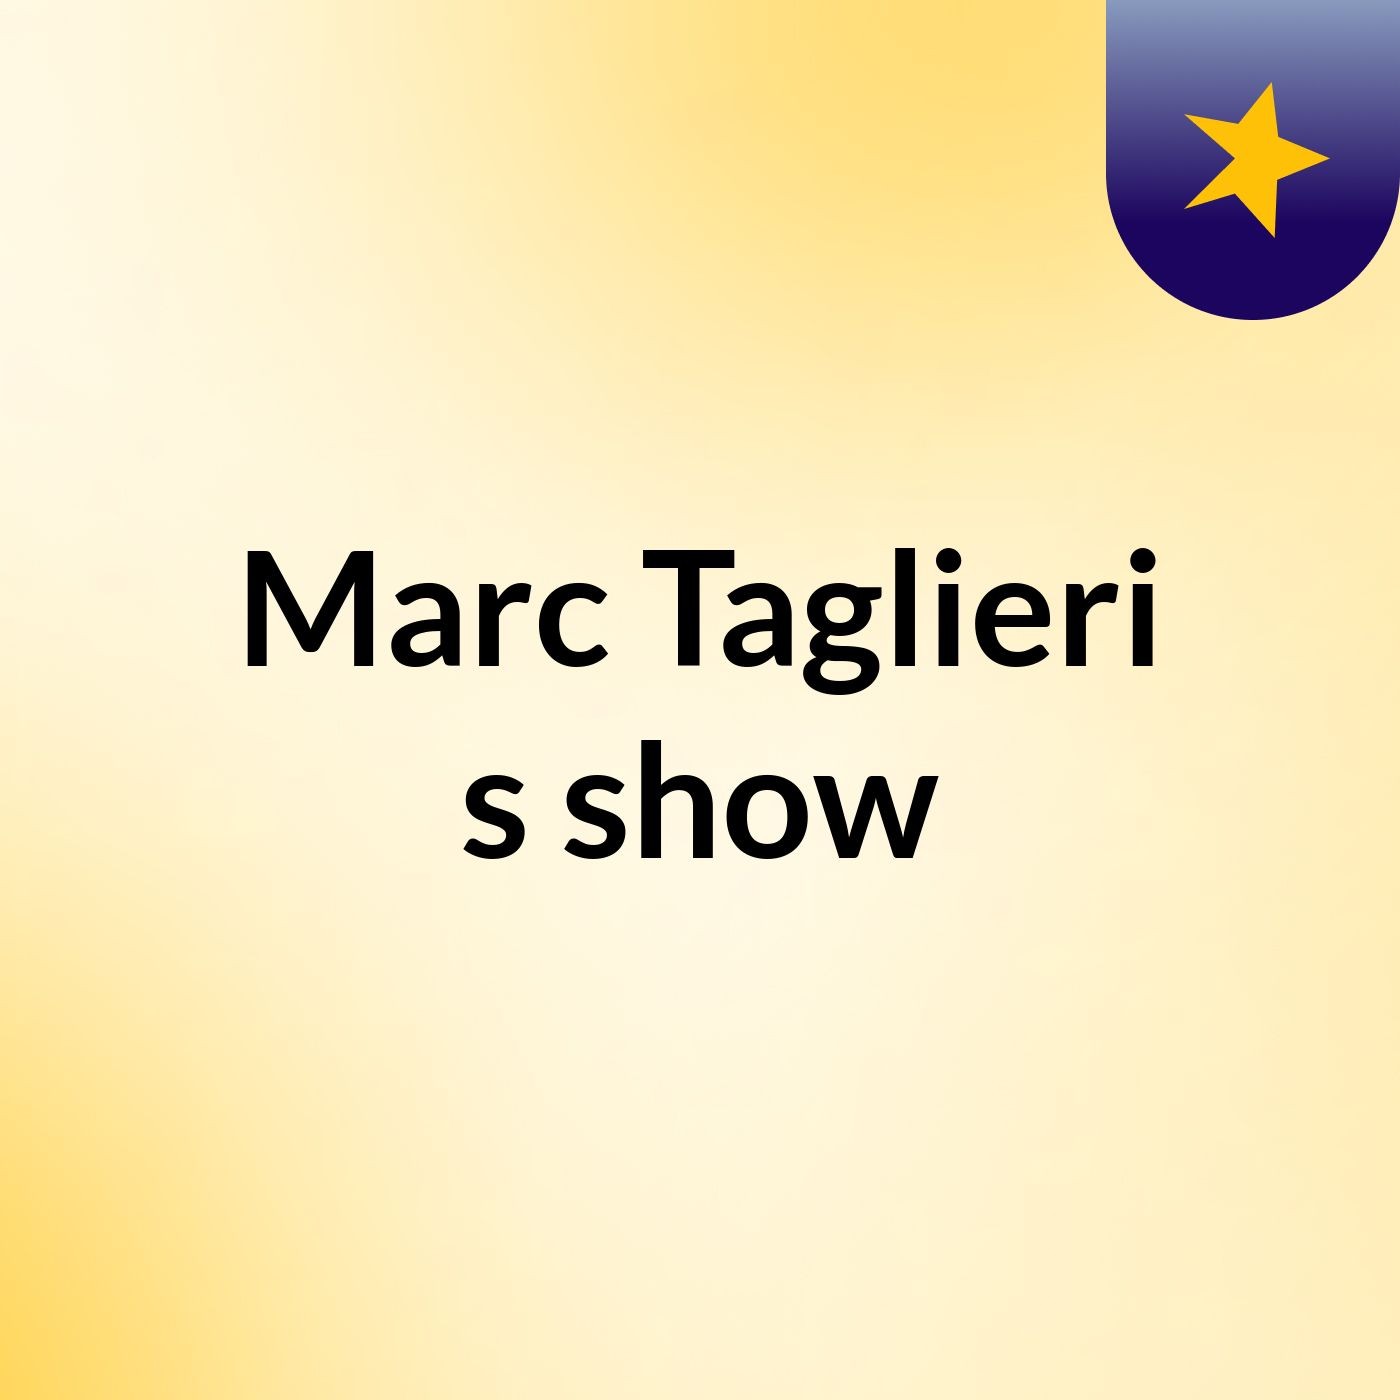 Marc Taglieri's show